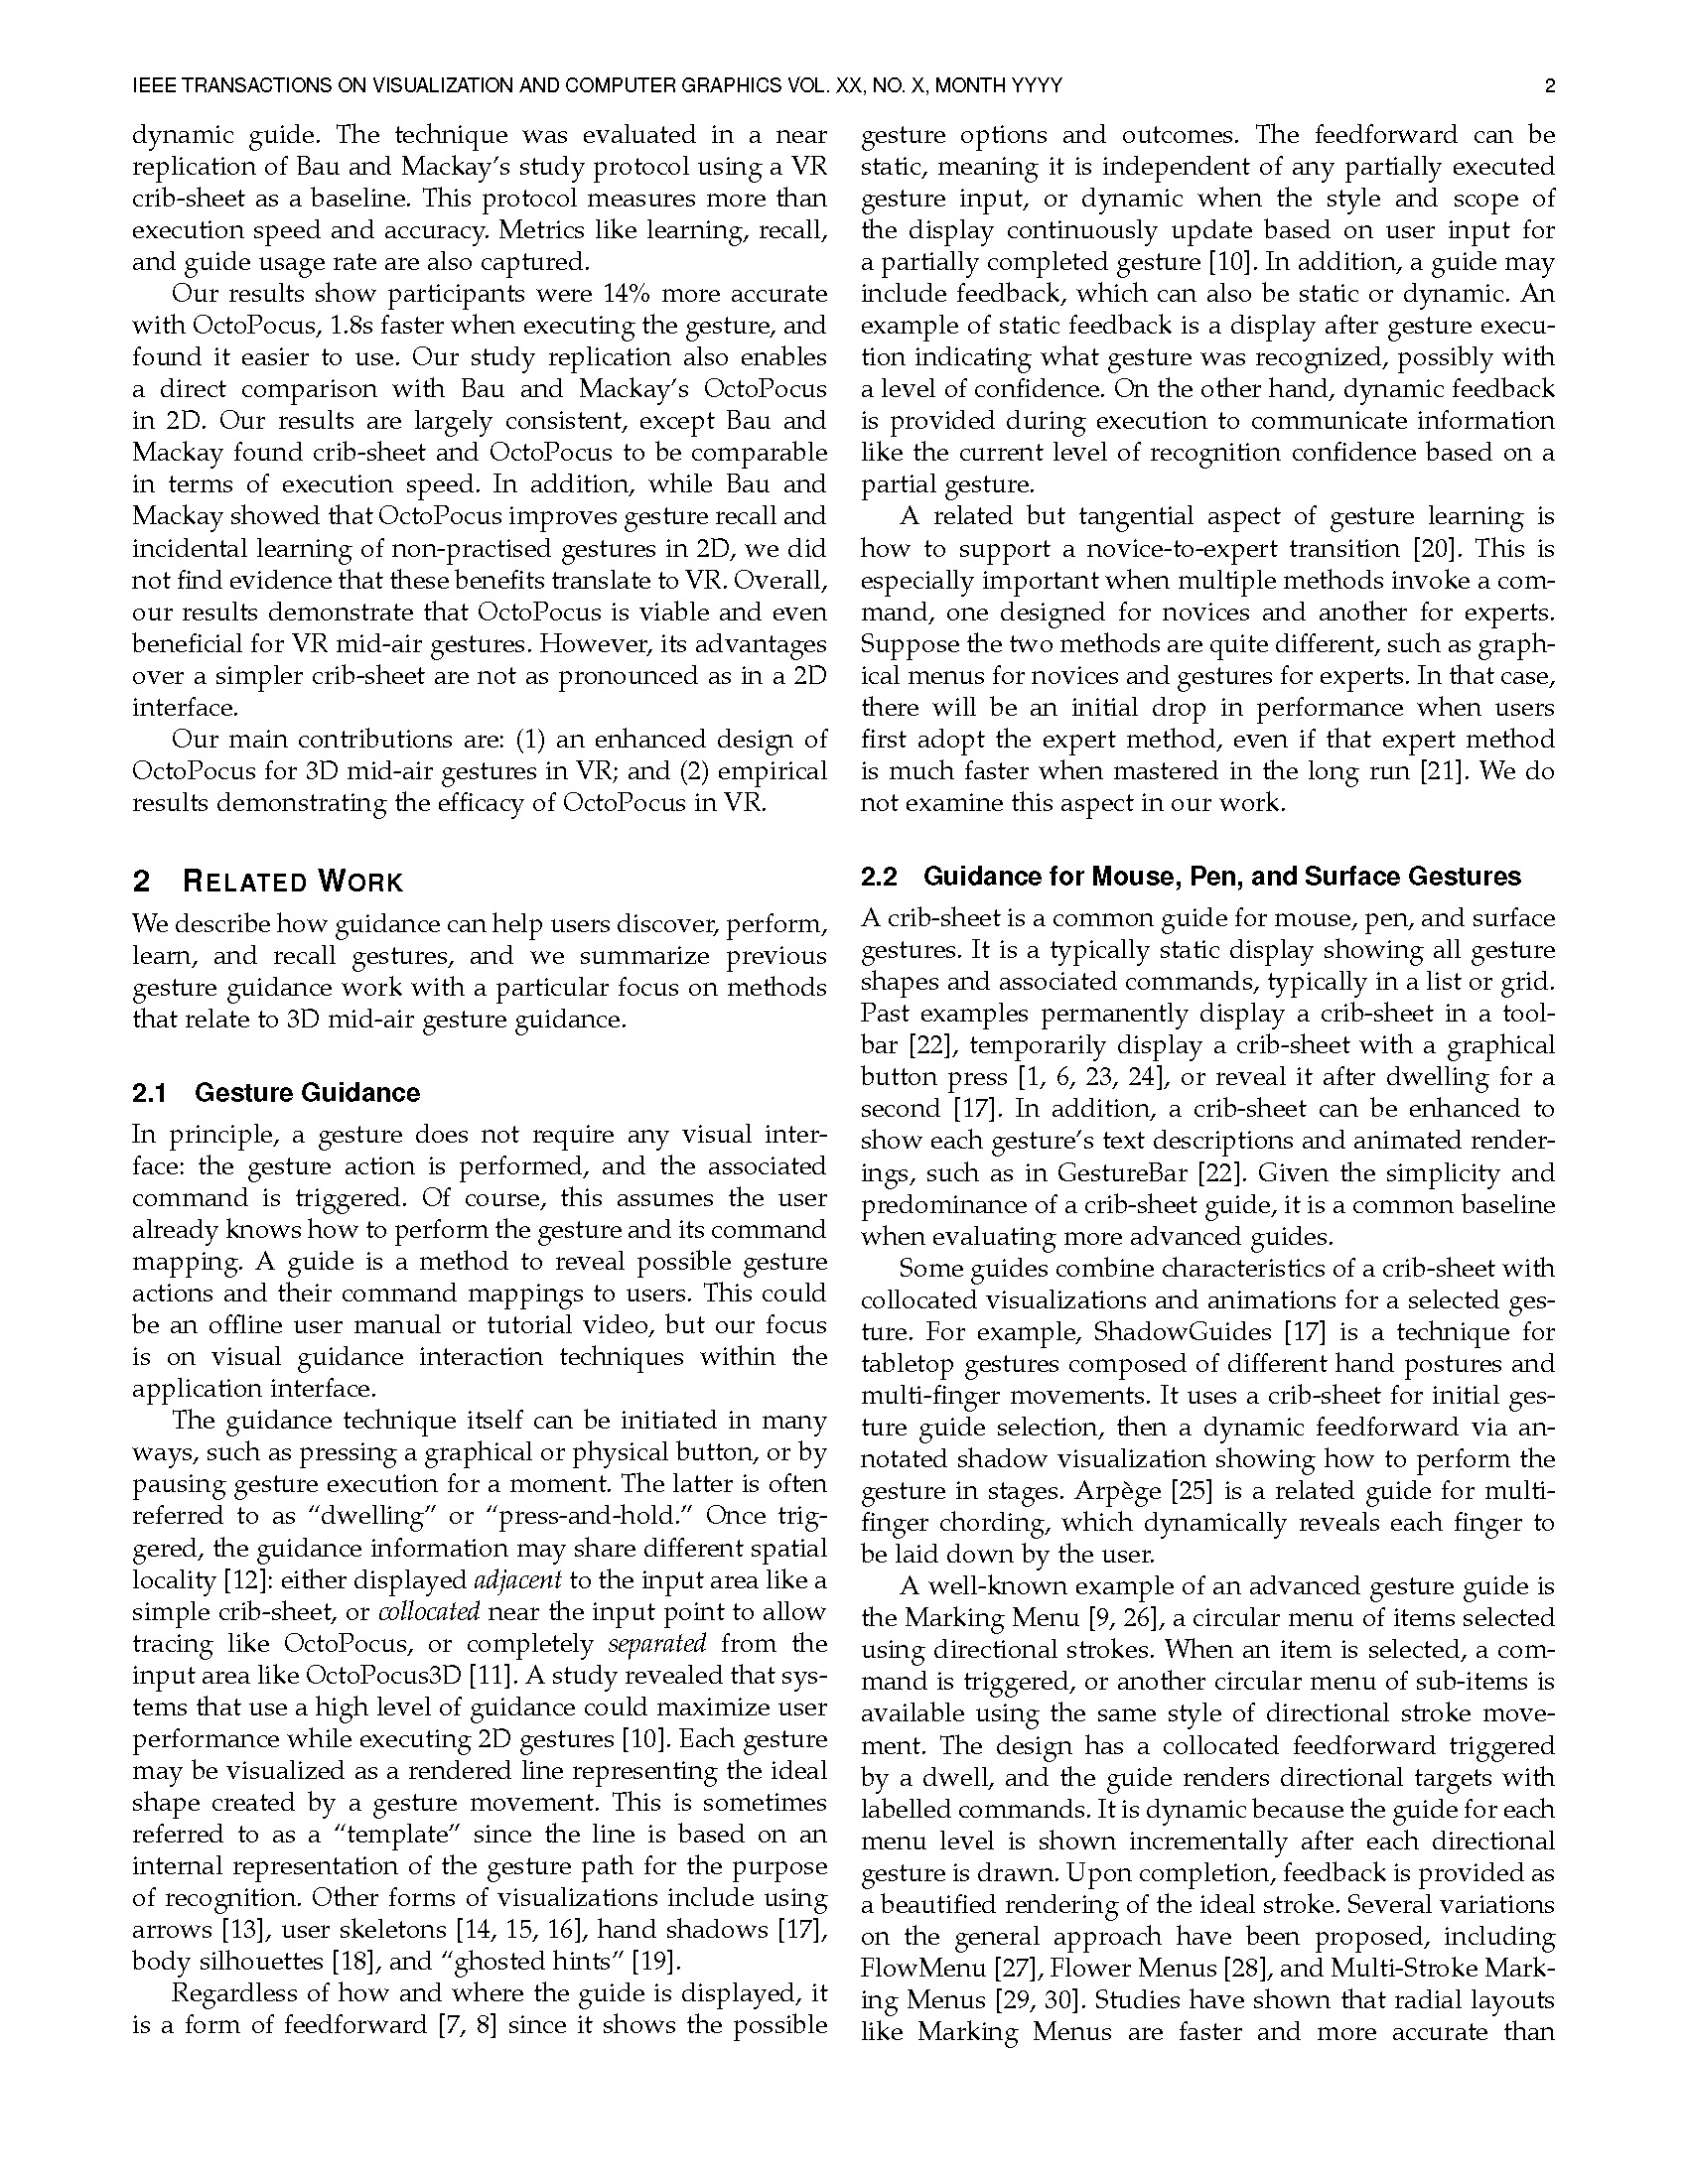 Download OctoPocus in VR Paper in pdf